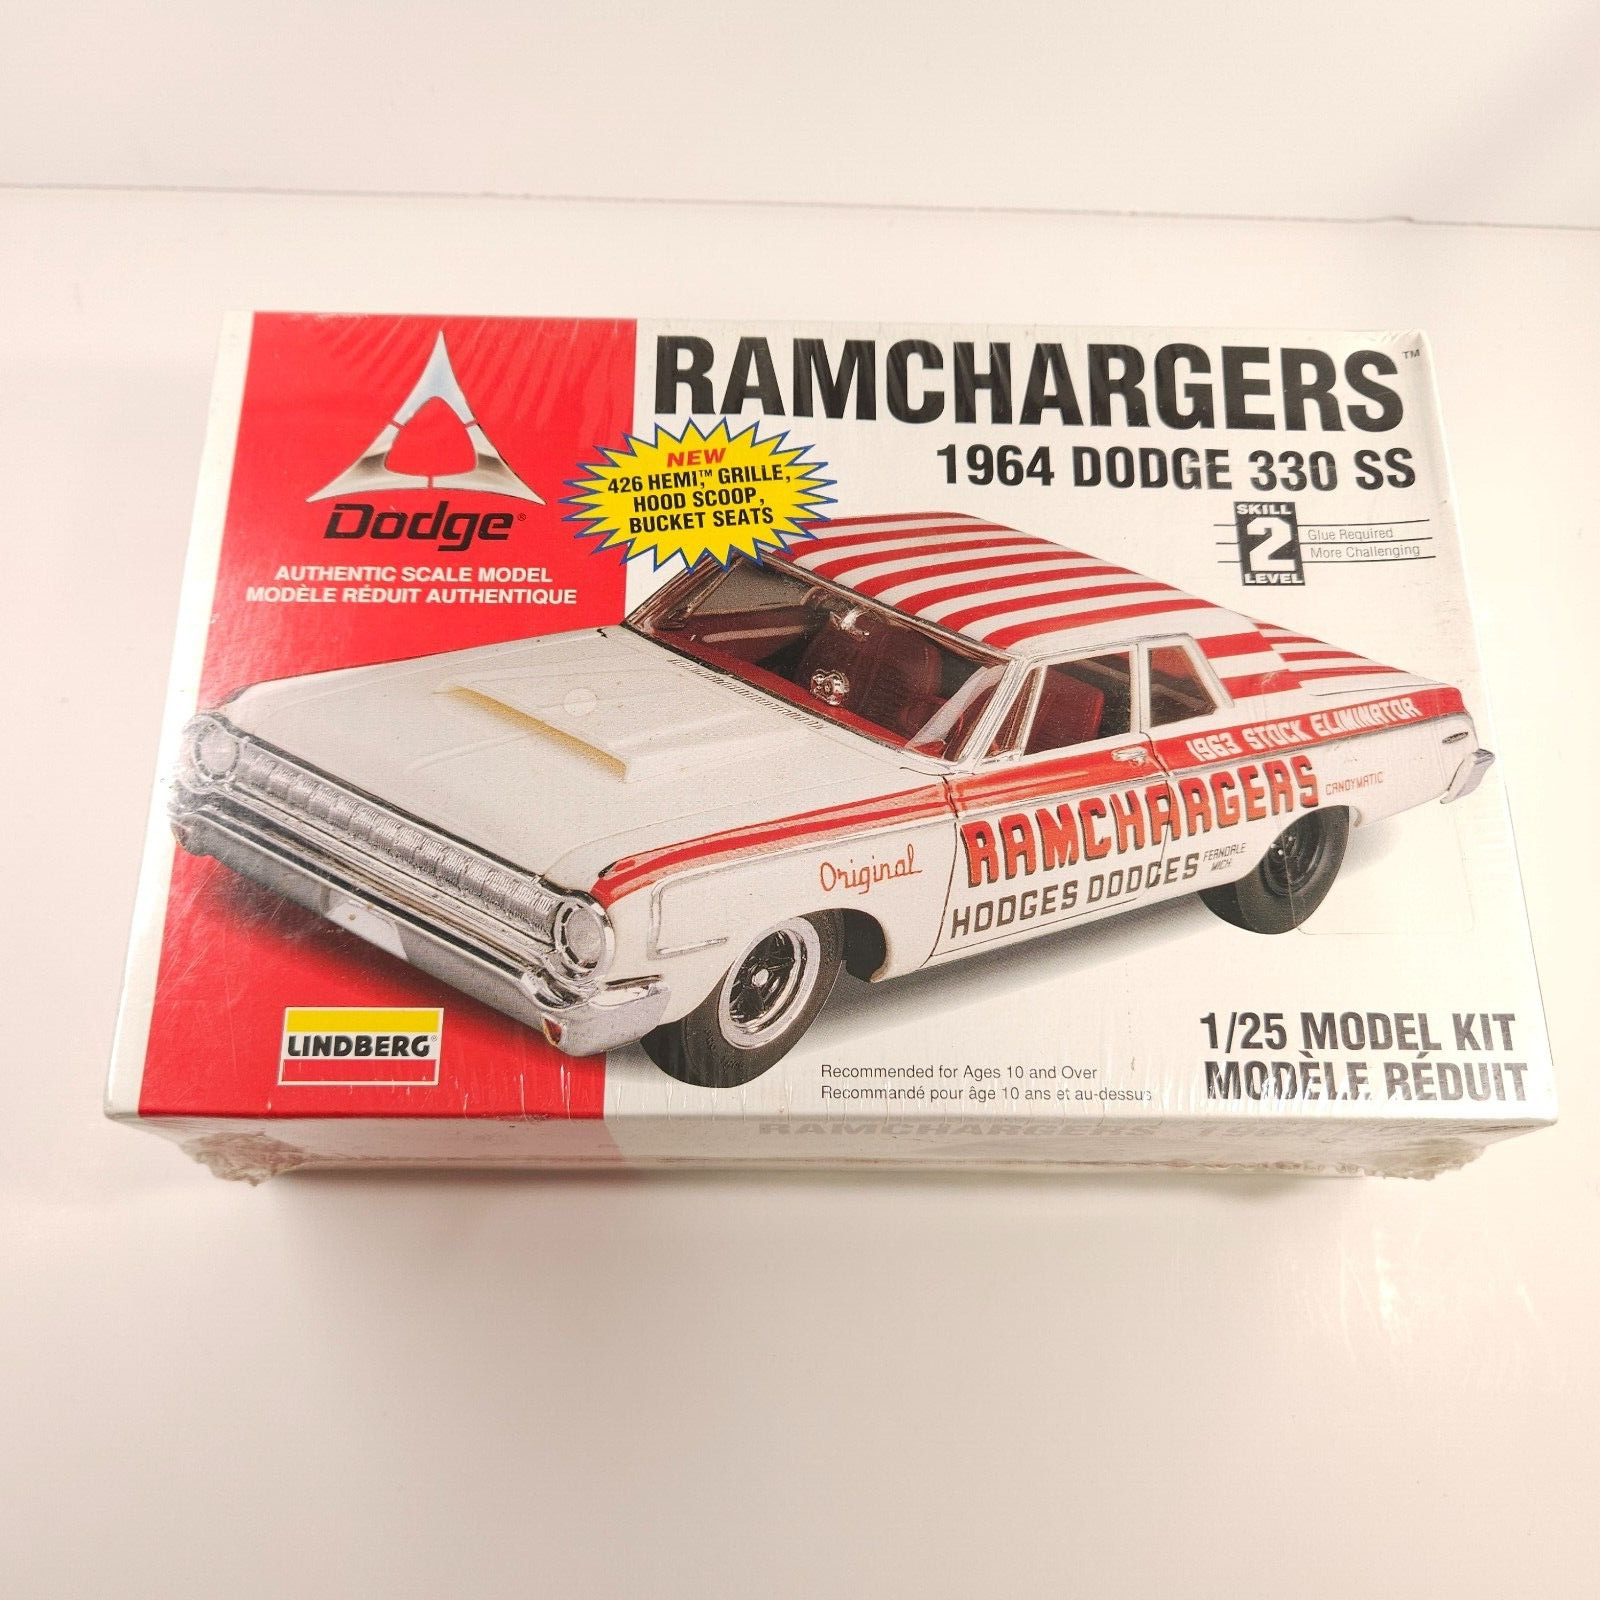 LINDBERG Ramchargers 1964 DODGE 330 SUPER STOCK SEALED Plastic Model Kit #72161